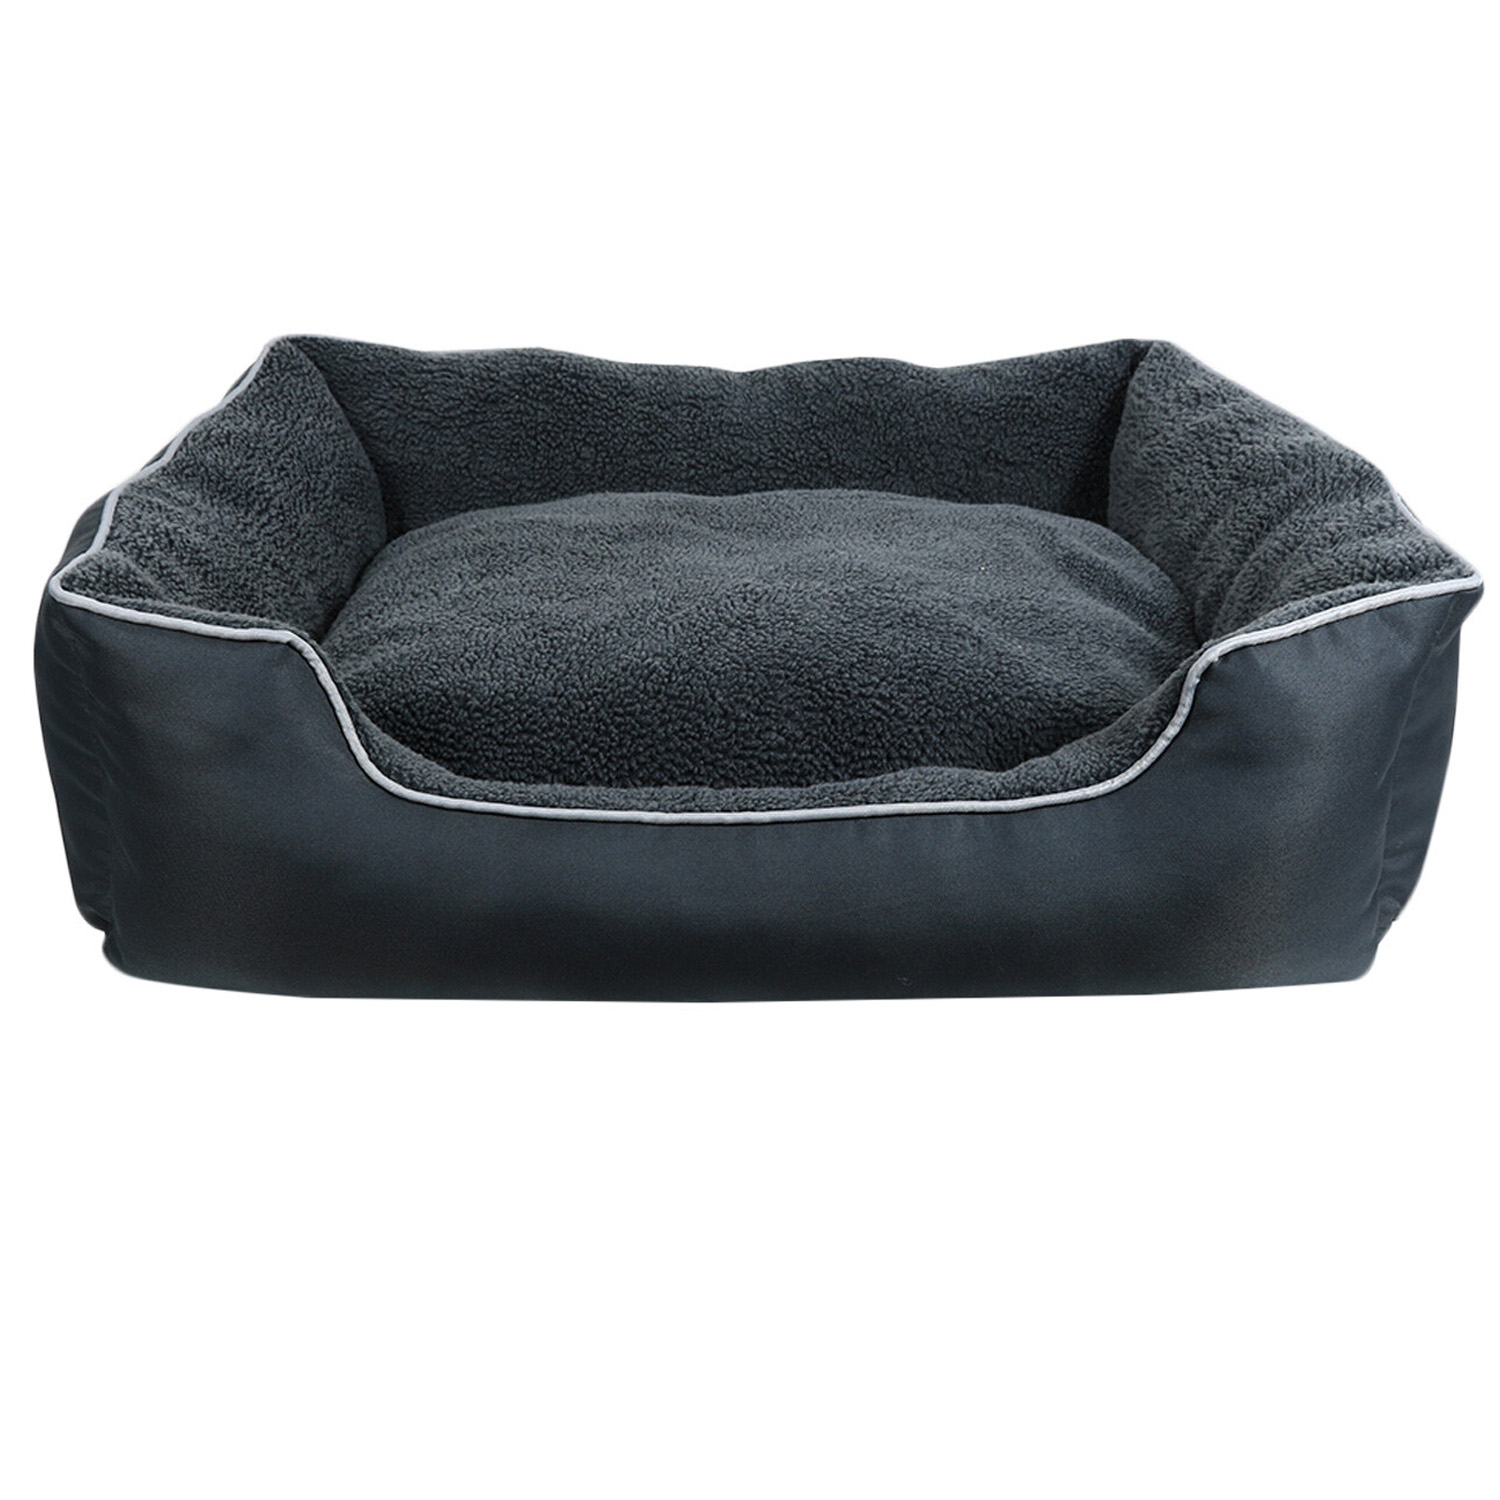 Clever Paws Smokey Grey RPET Rectangular Large Pet Bed Image 1